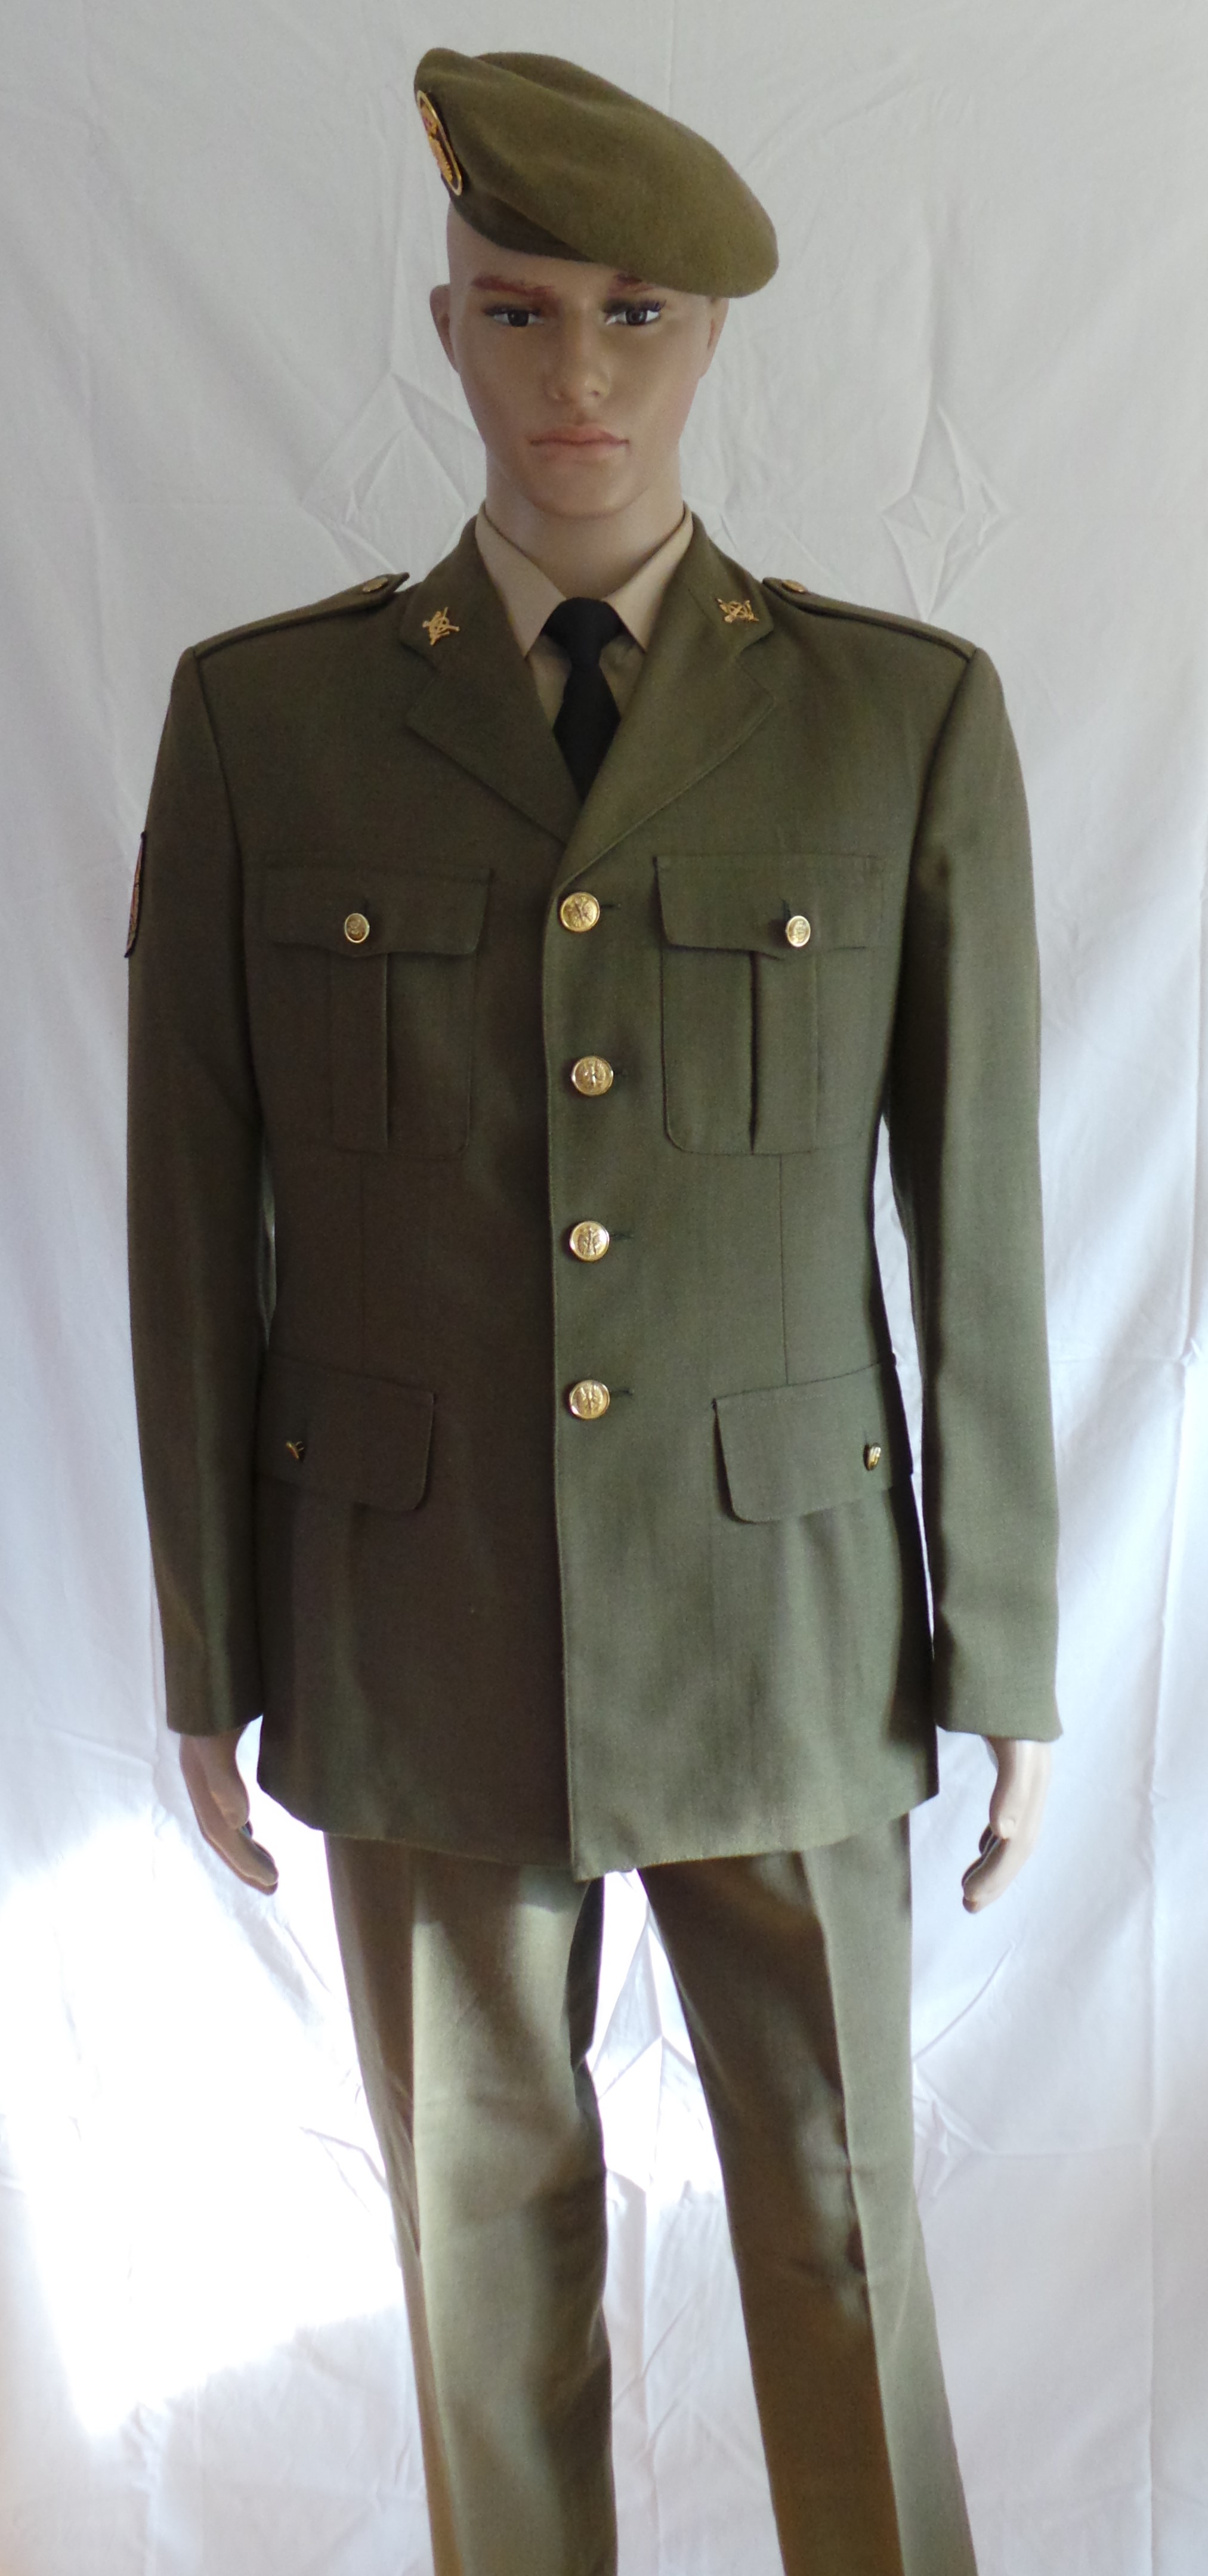 Spanish Army Infantry Other Ranks Service Dress (2)1